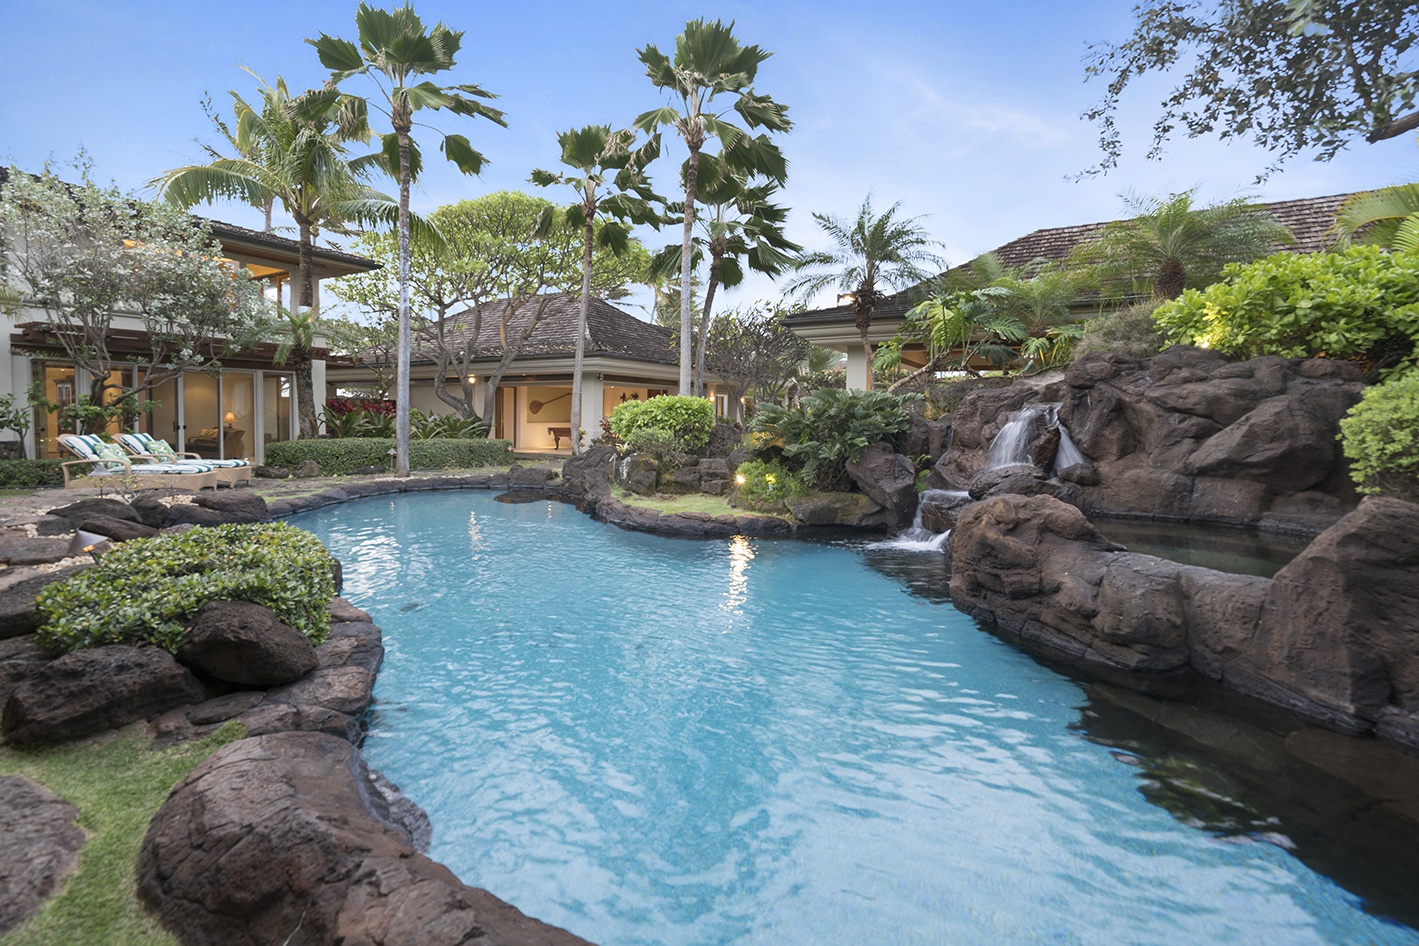 Kailua Vacation Rentals, Kailua's Kai Moena - Tropical lagoon style pool with natural rocks and cascading waterfalls.